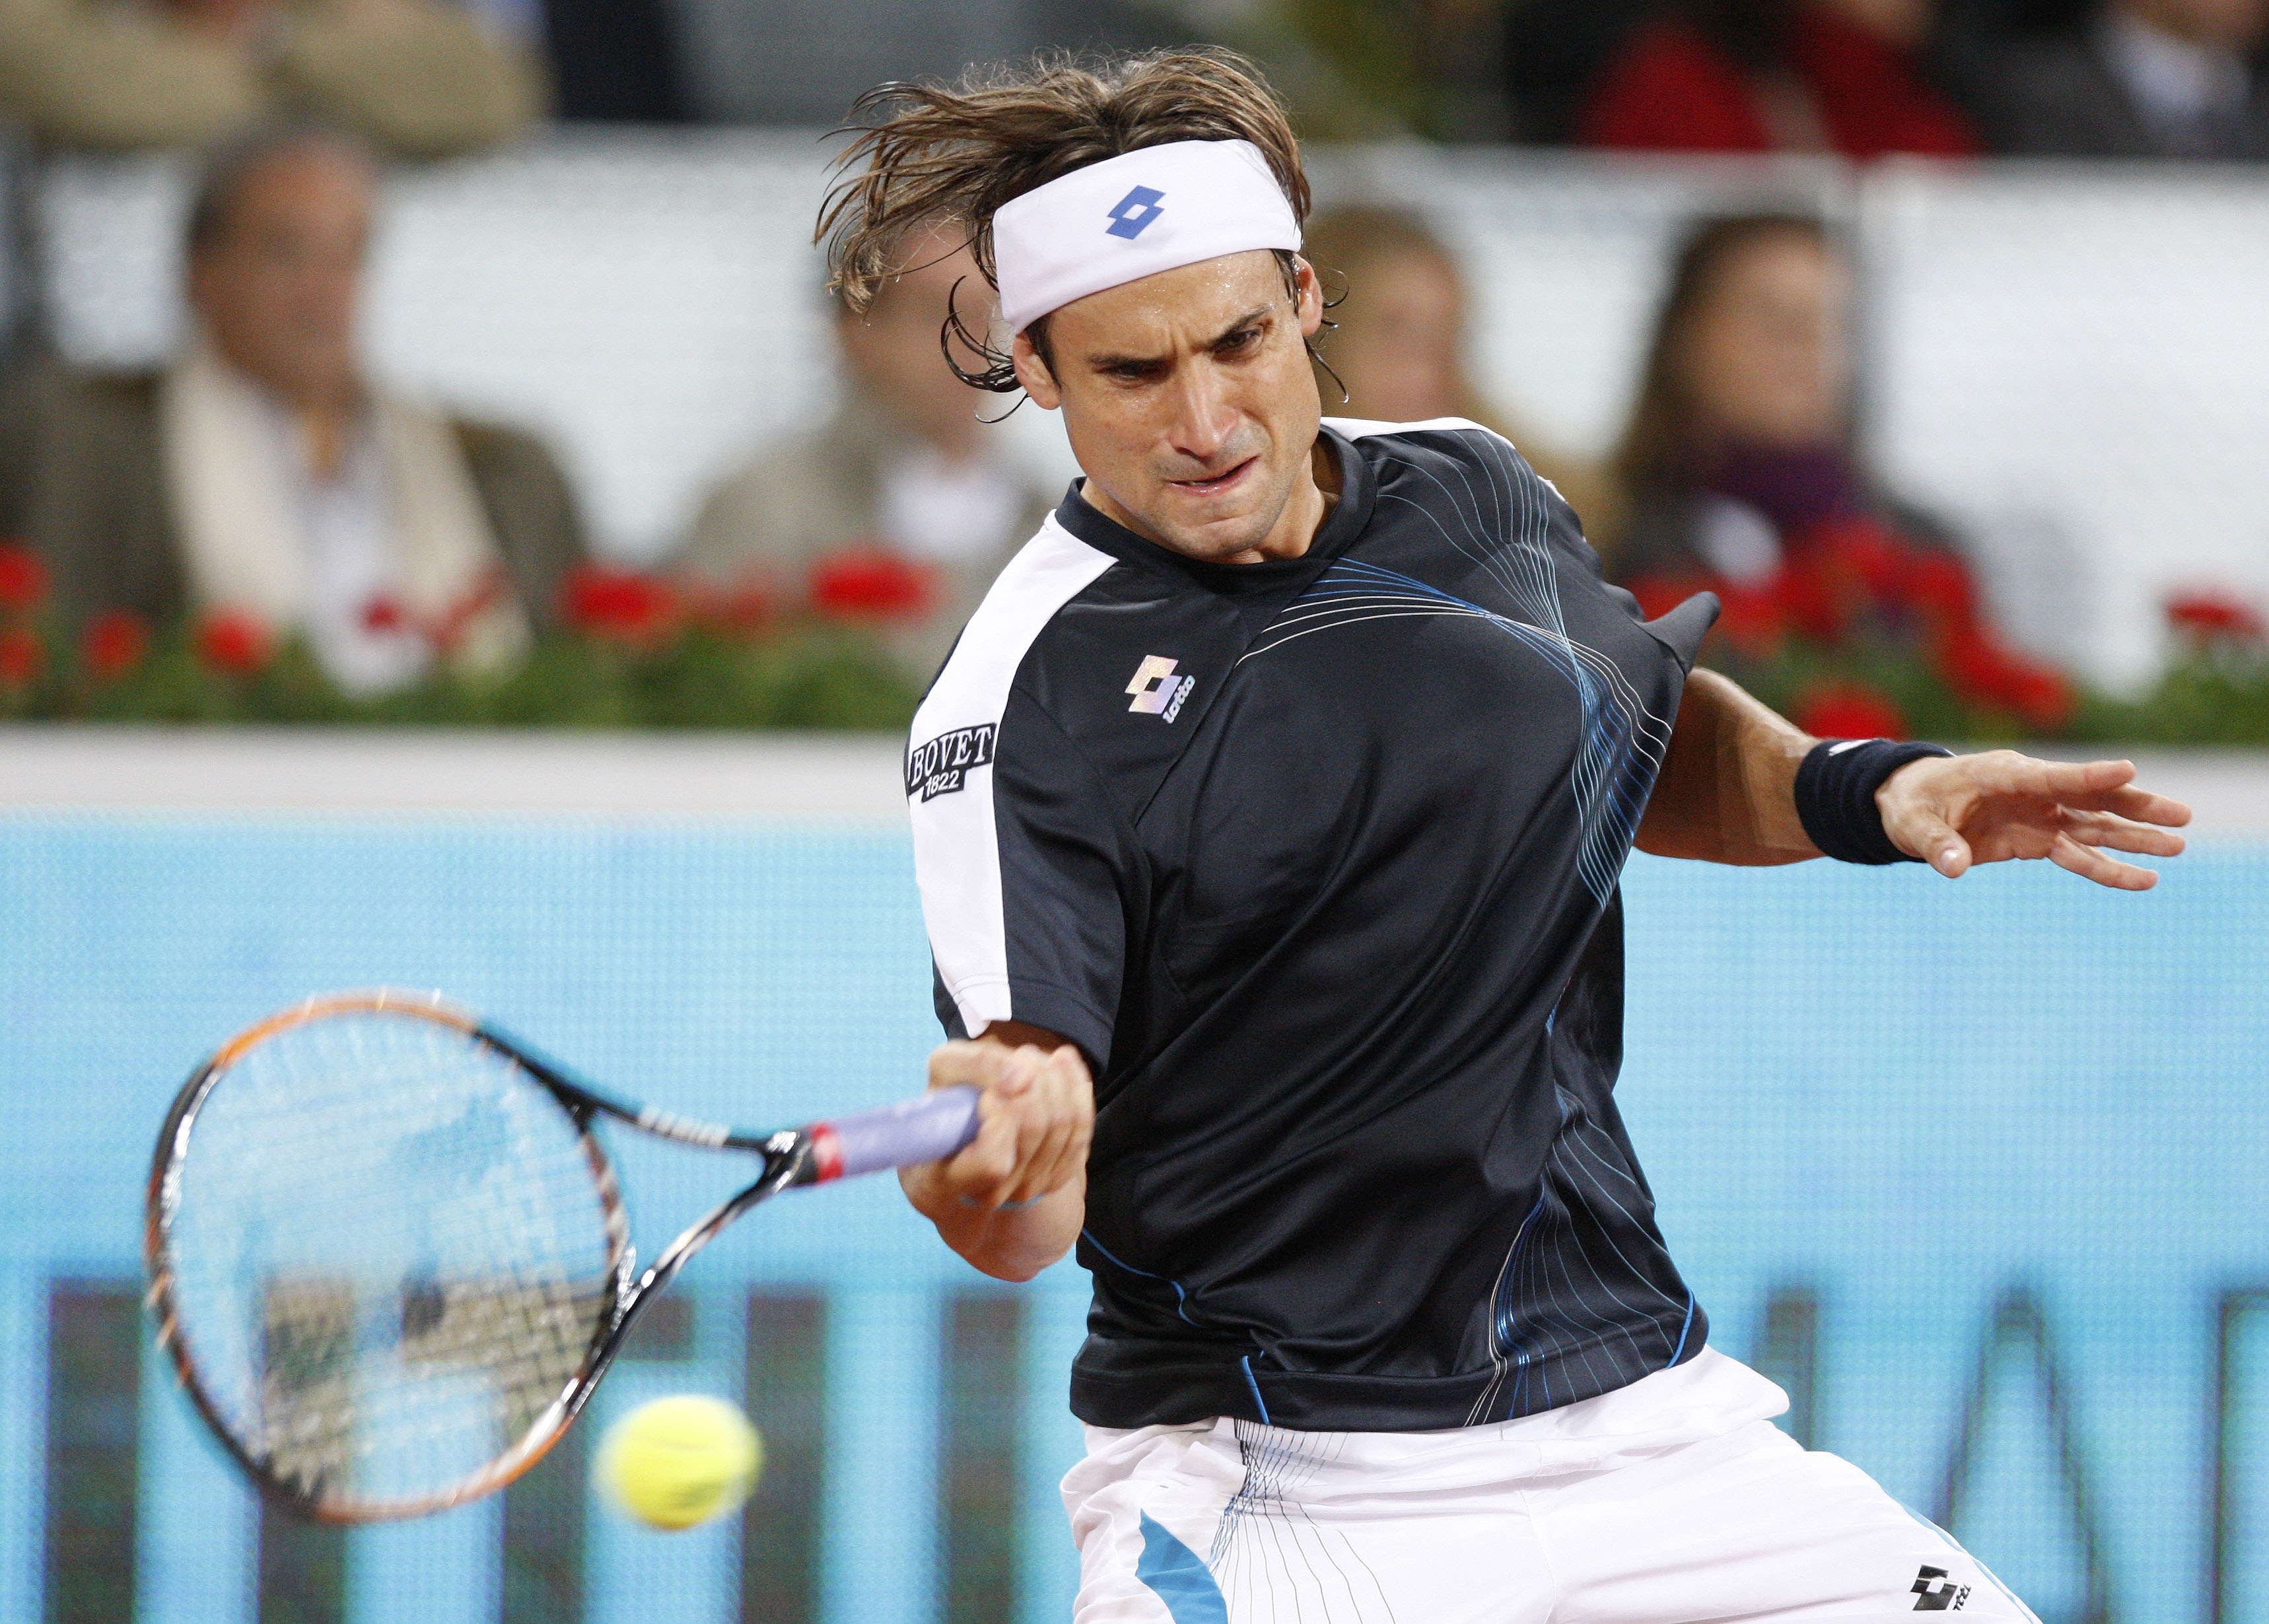 ATP, David Ferrer, Roger Federer, Tennis